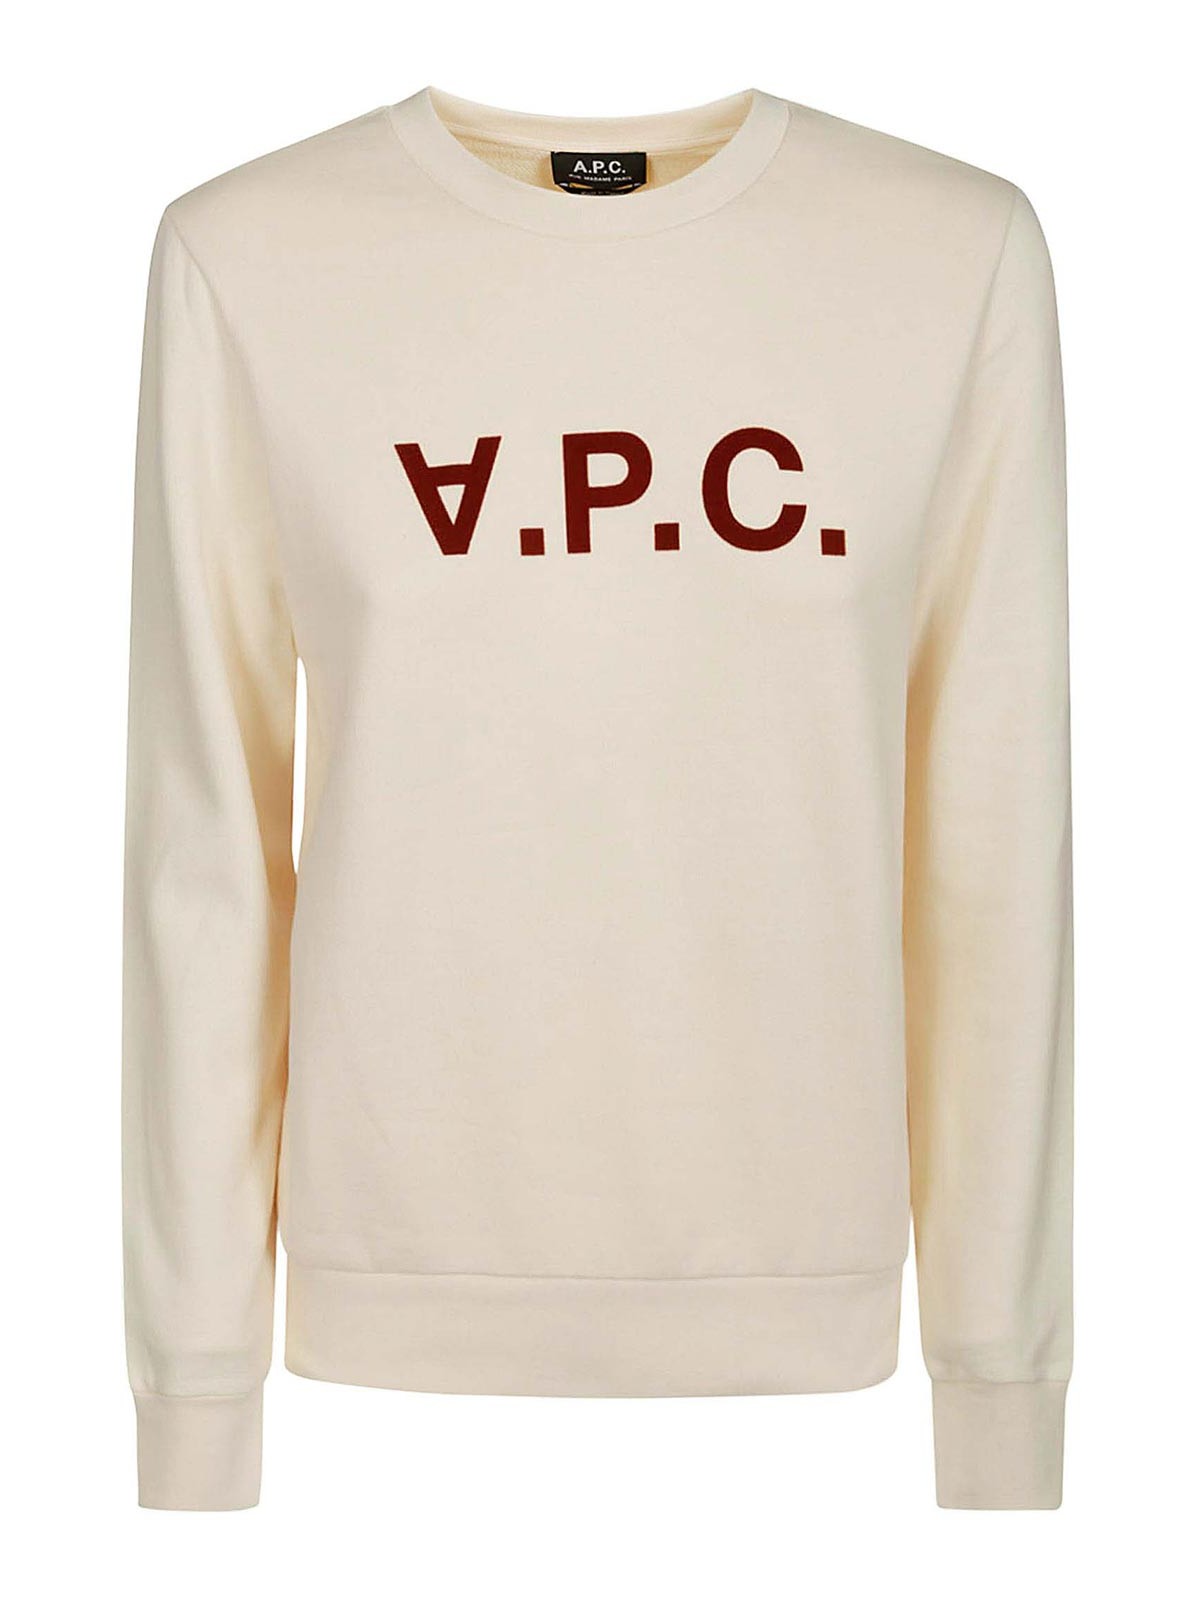 Apc Cotton Sweatshirt In Cream